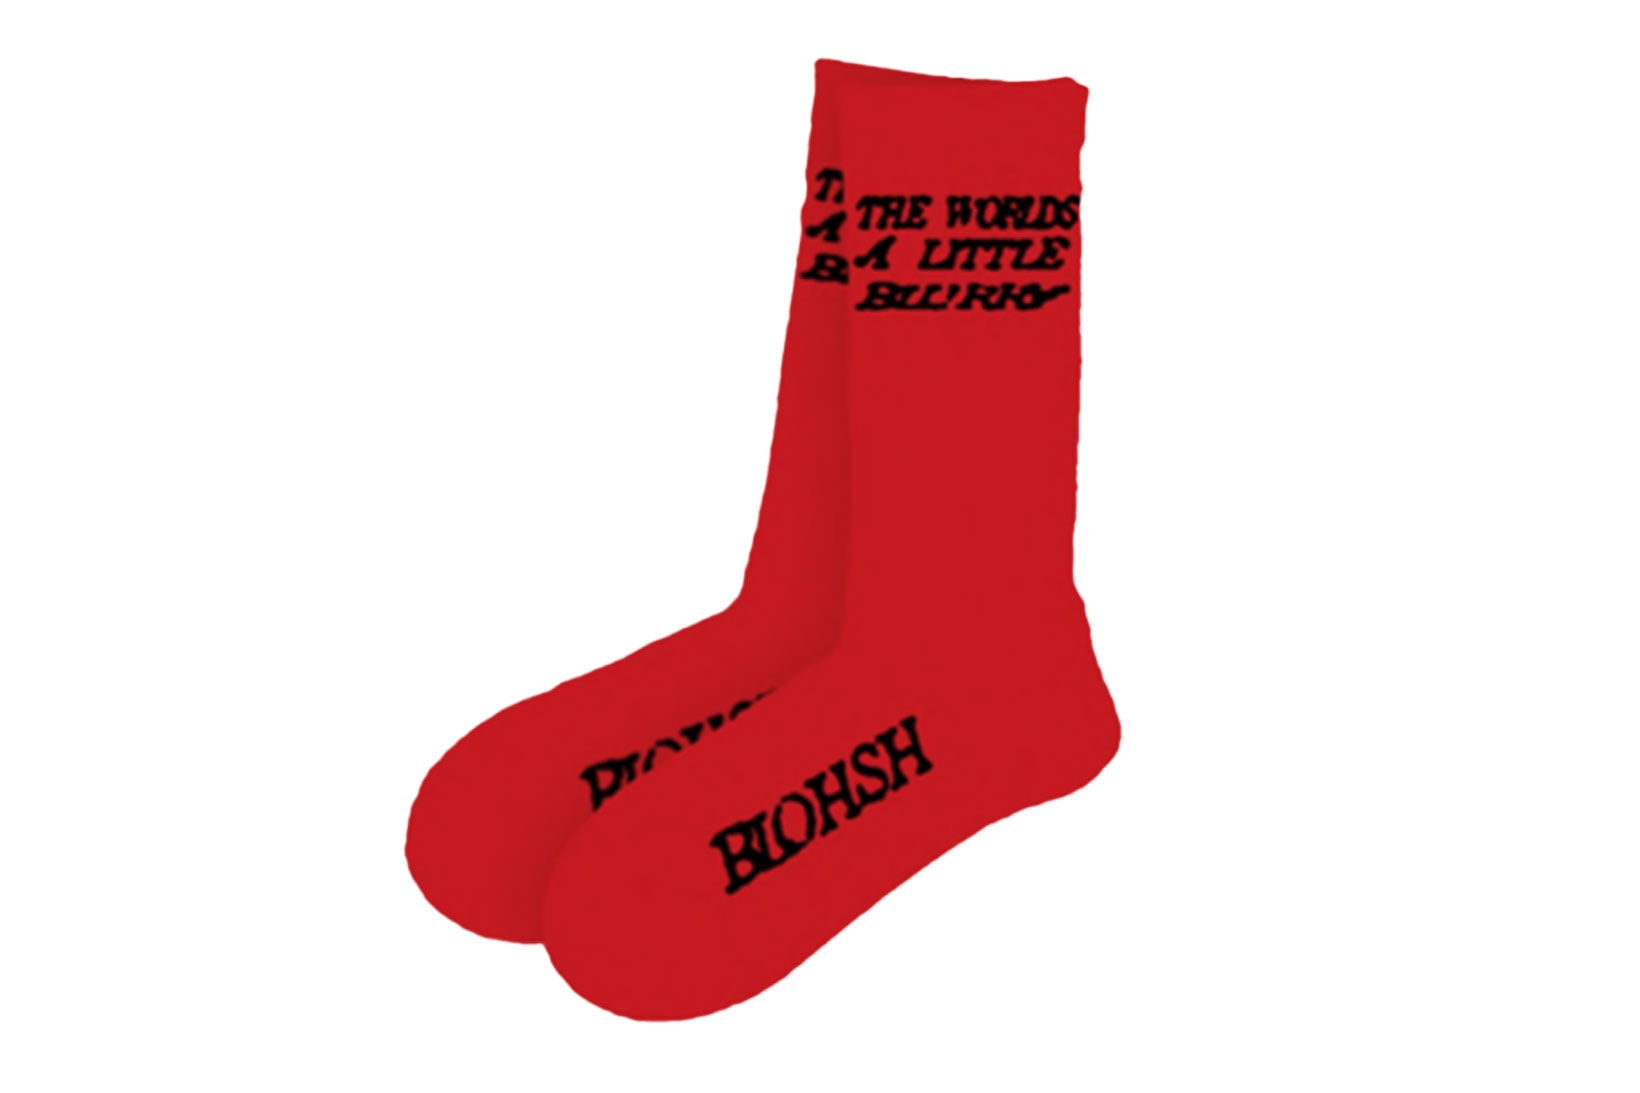 billie eilish blohsh merch the worlds a little blurry documentary collection hoodies logo socks